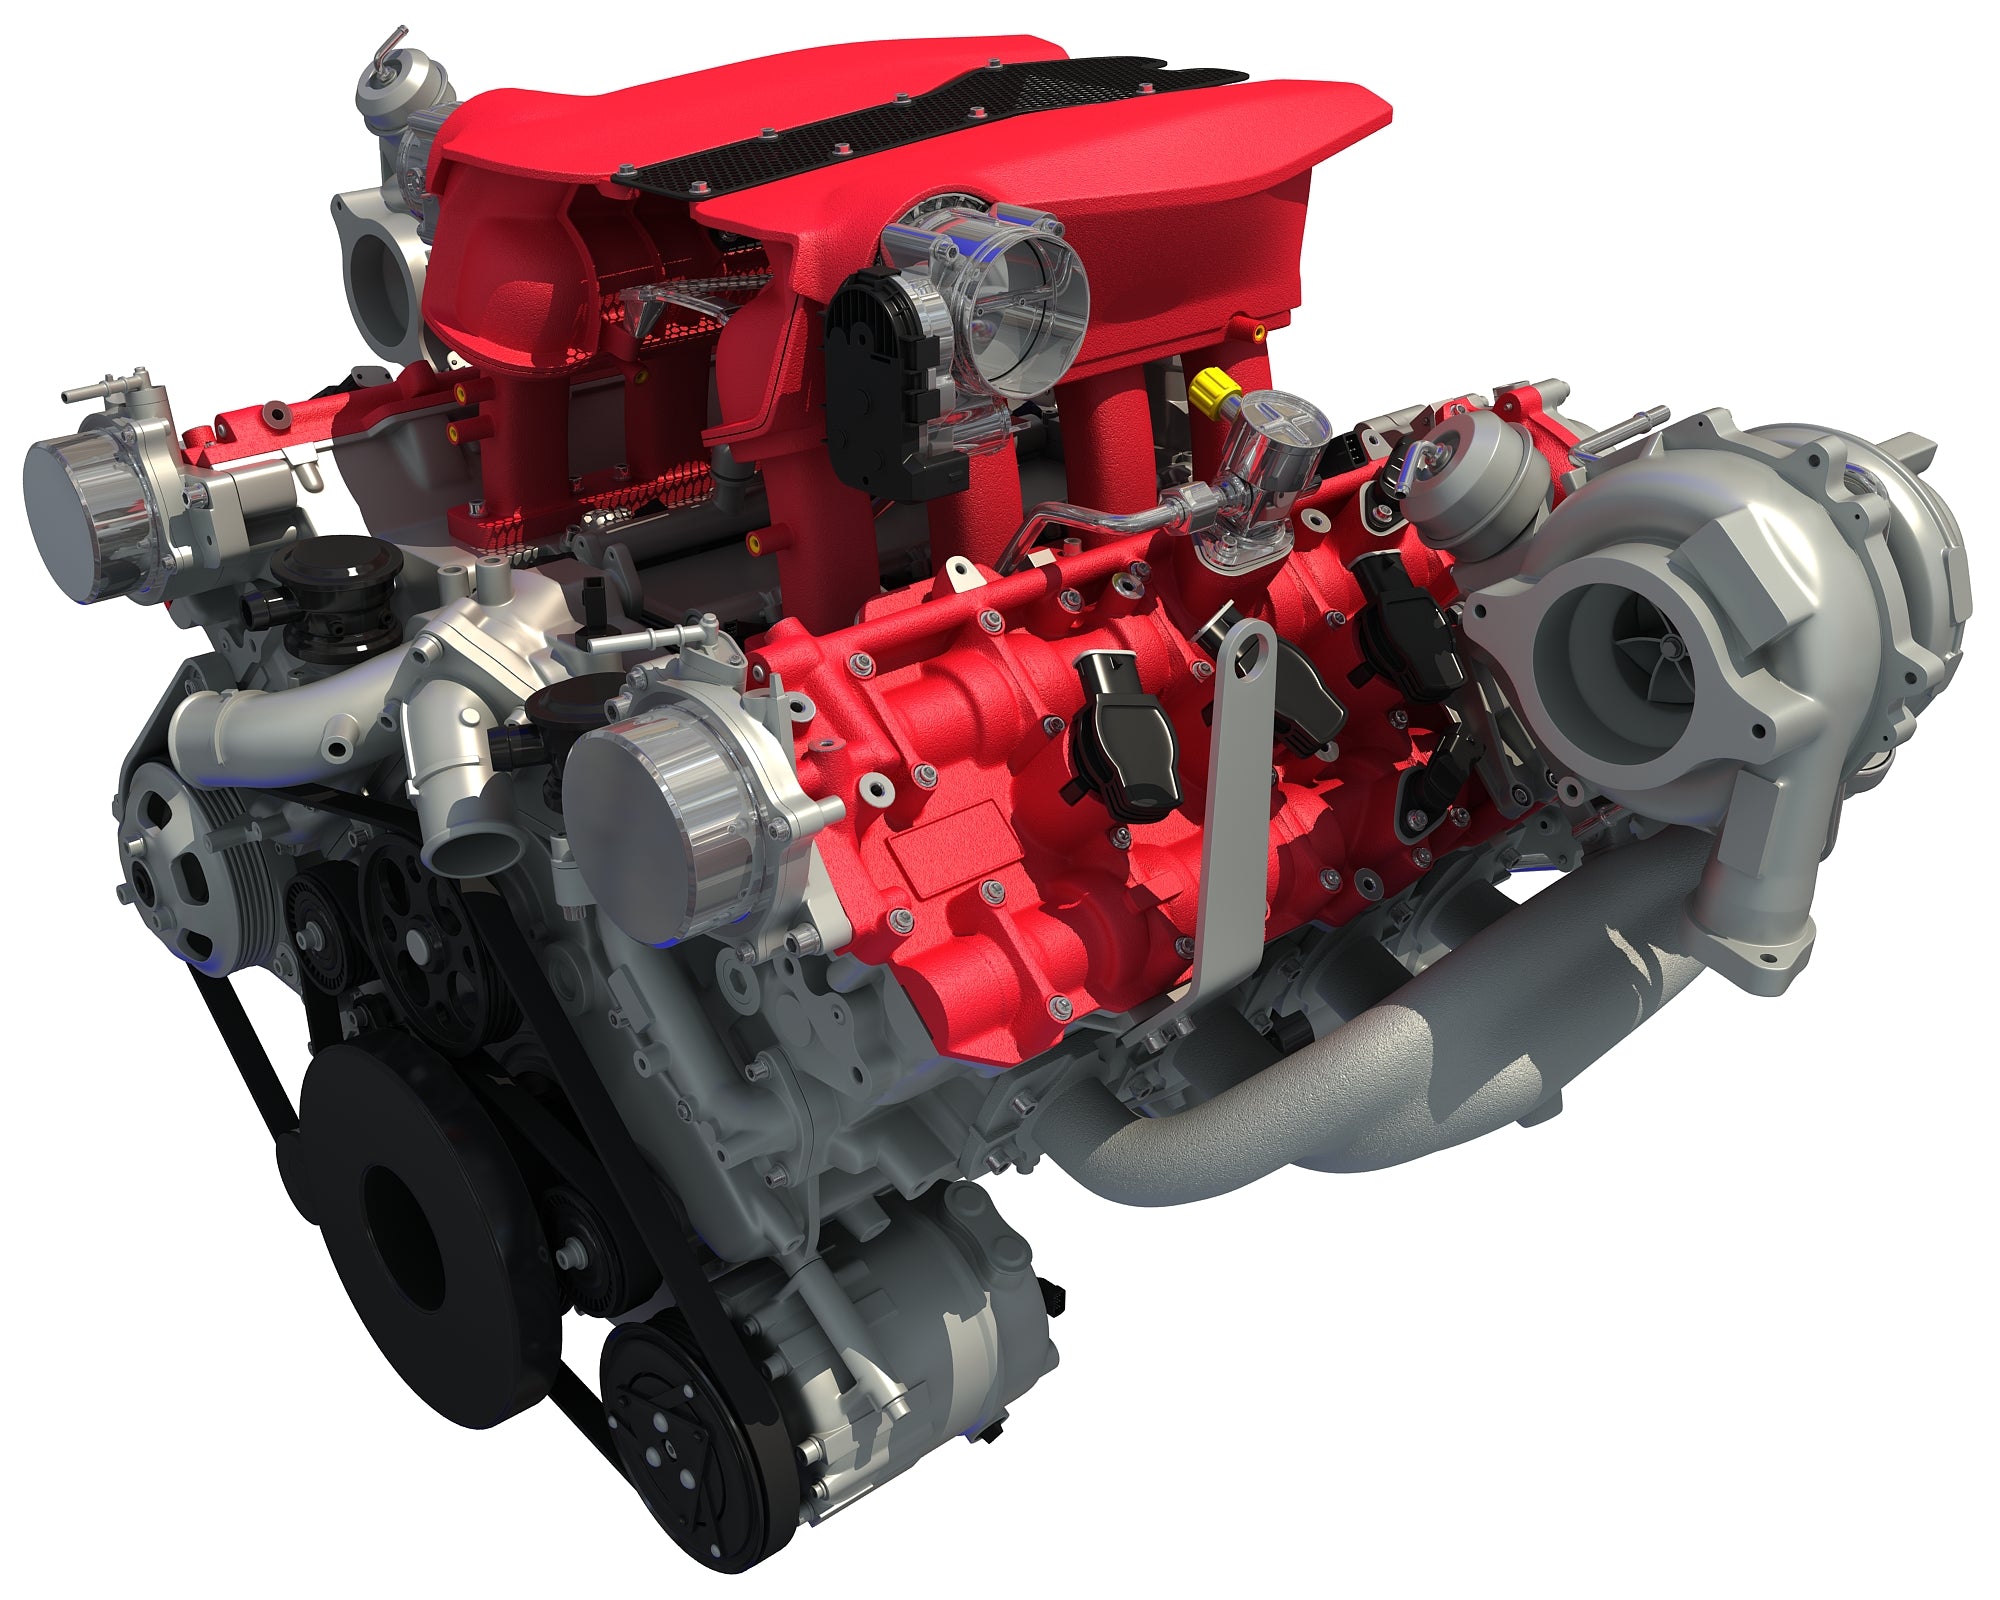 Ferrari 488 GTB Twin Turbocharged V8 Engine